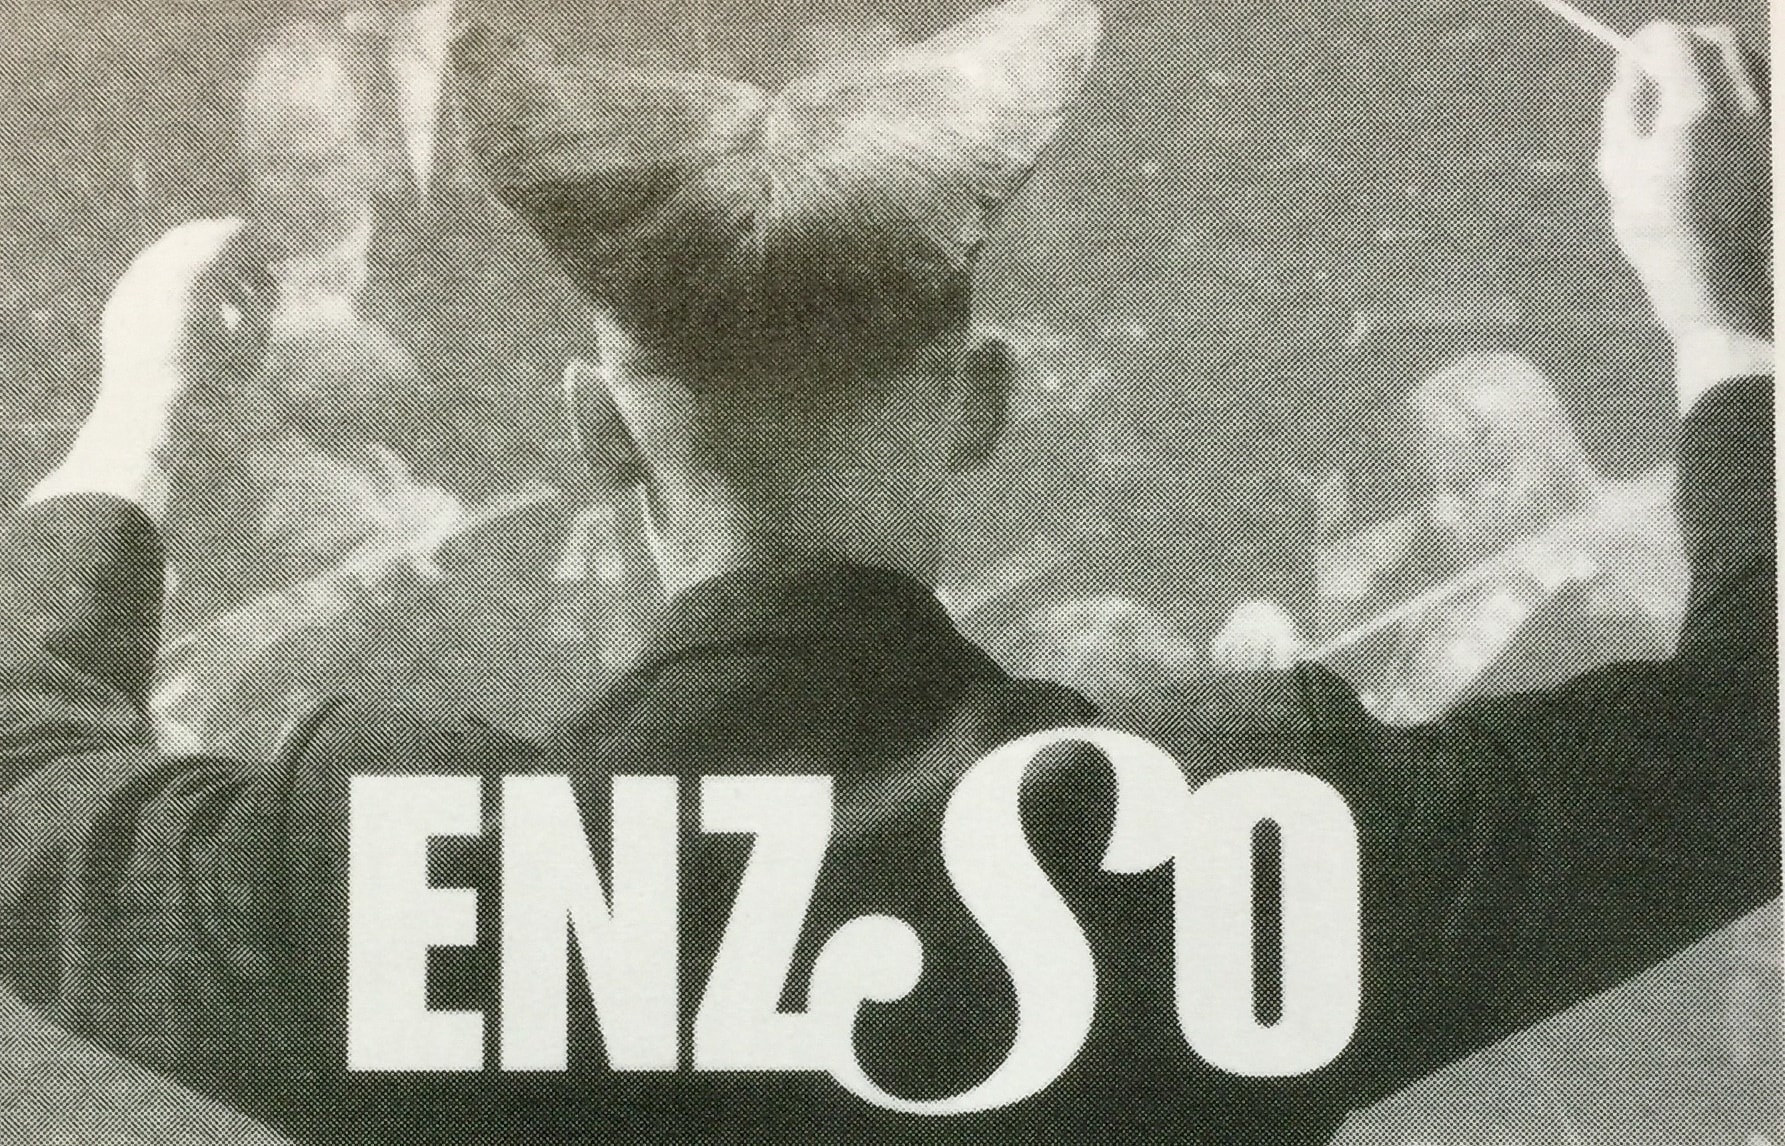 ENZSO original poster